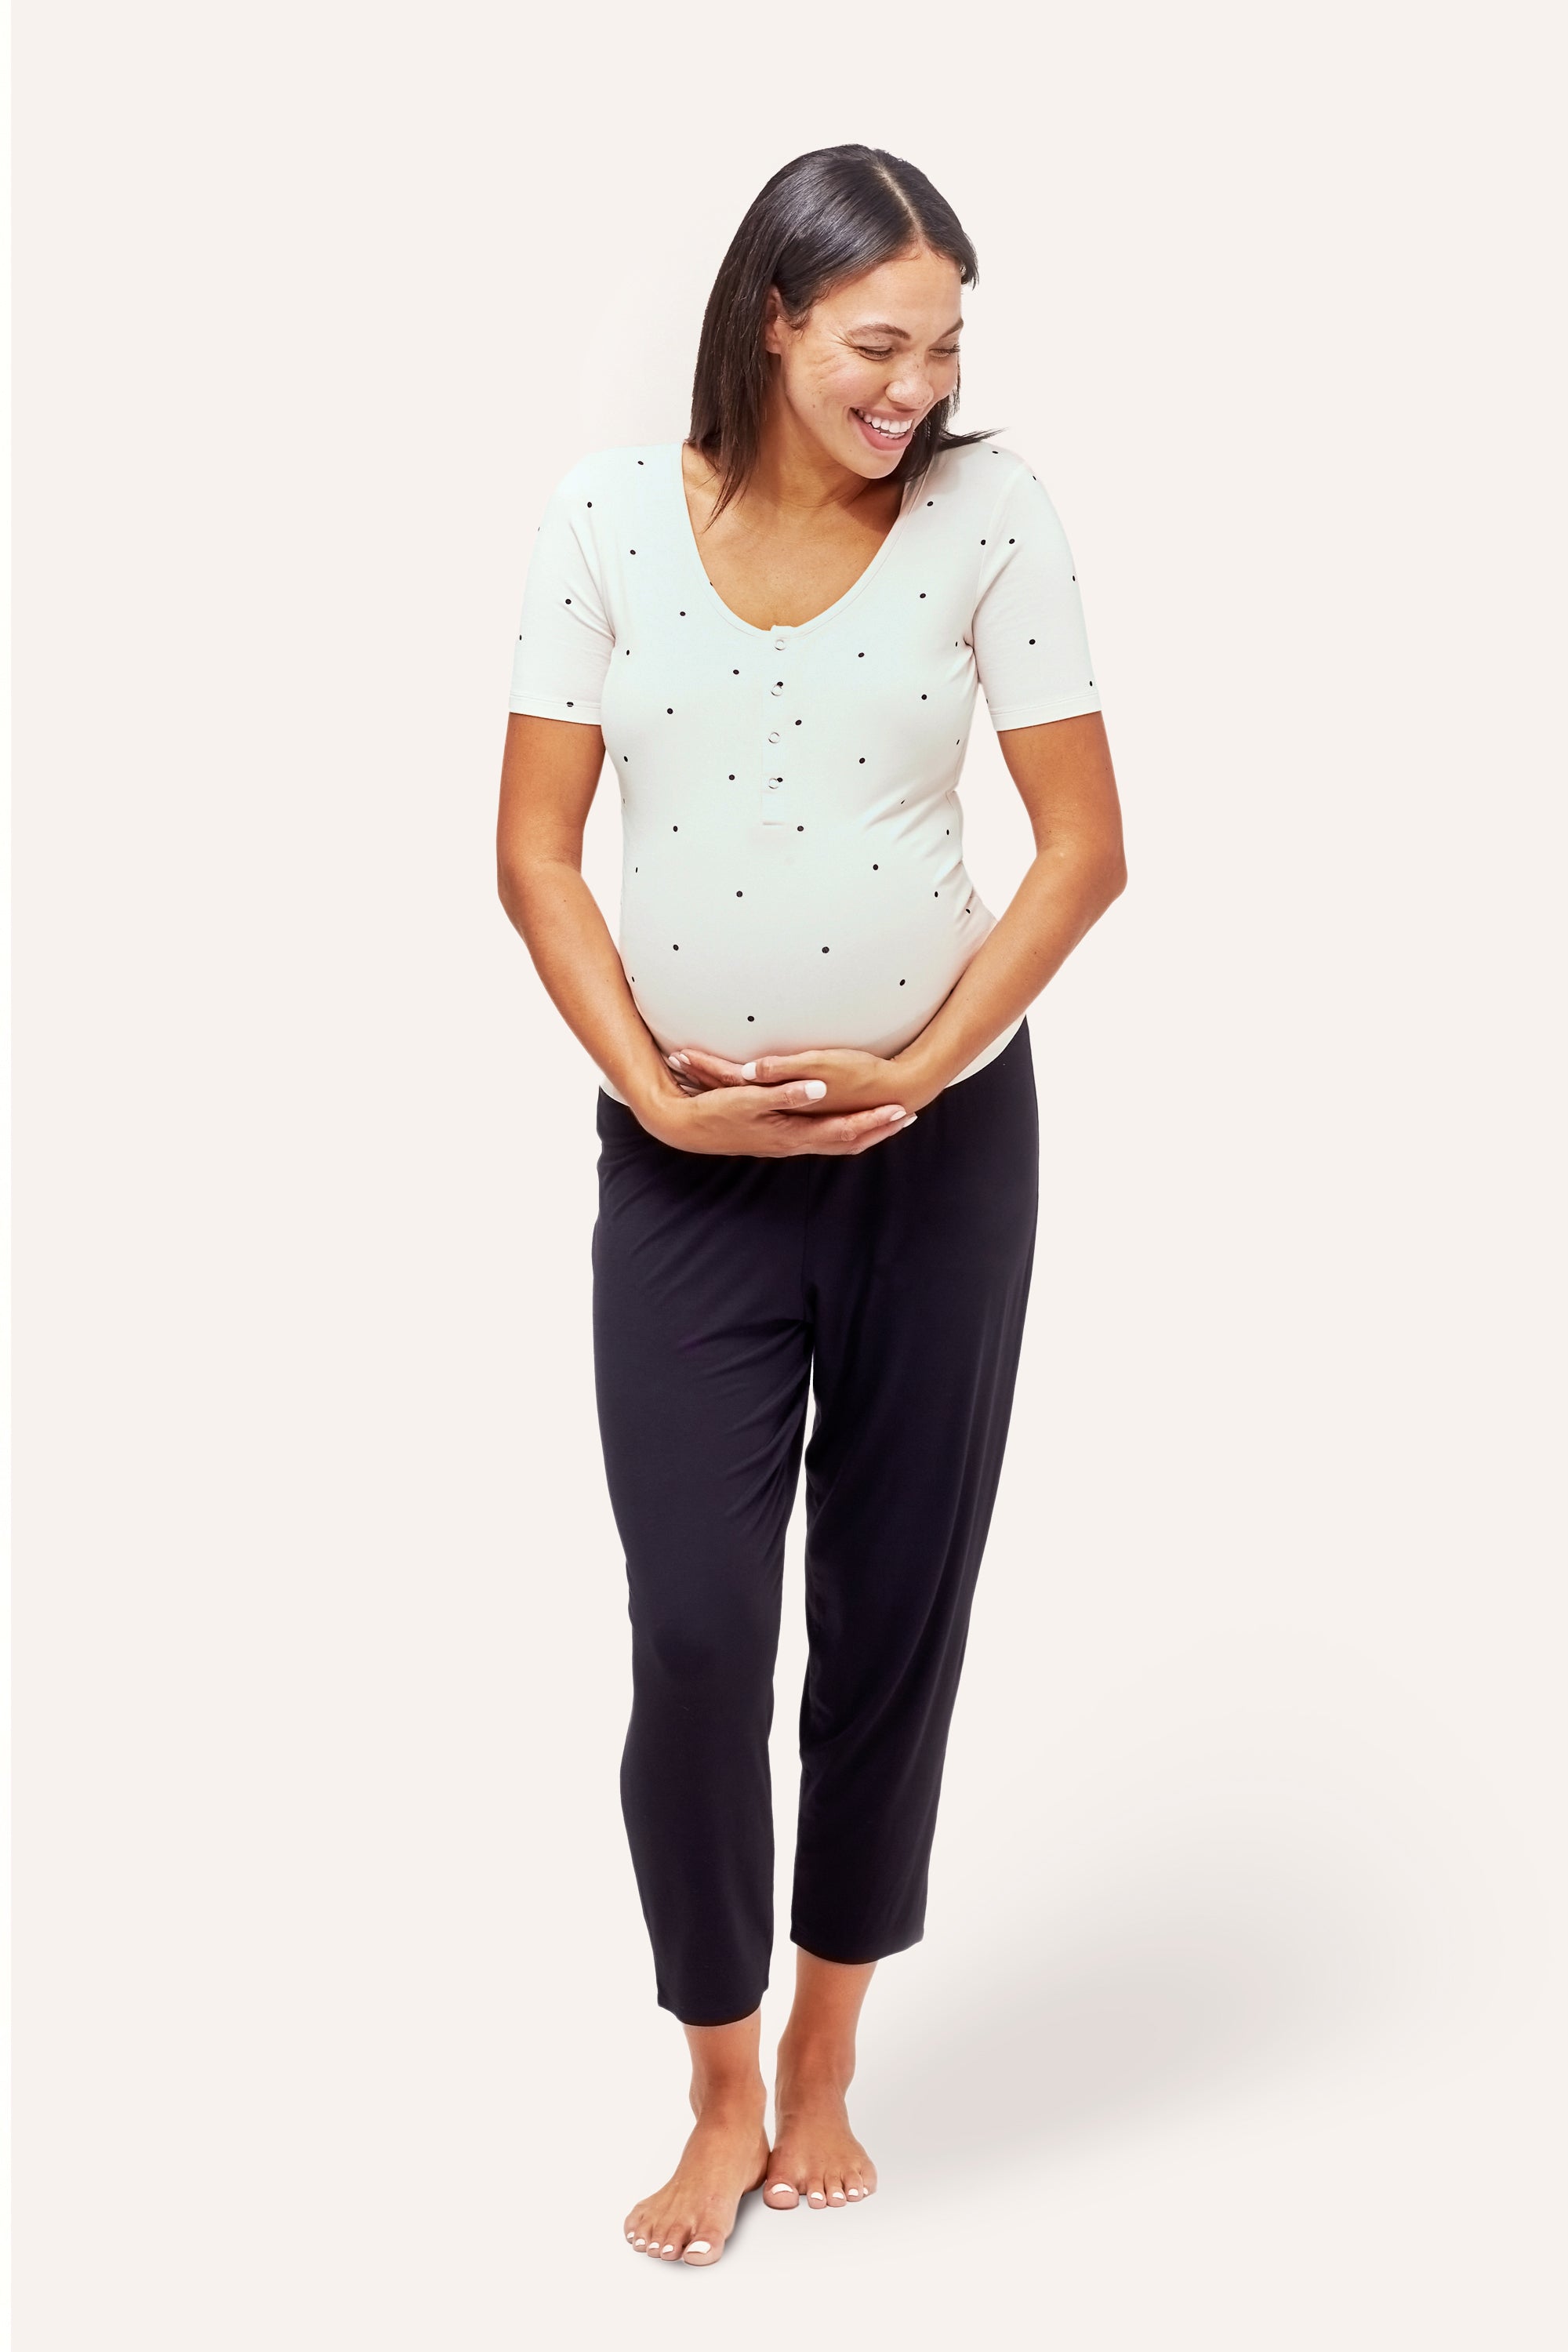 Miyanuby 3 Pieces Maternity Nursing Pajamas Set Short Sleeve Breastfeeding  Shirts with Built in Bra, Pregnancy Shorts & Pants 3 Piece Nursing  Sleepwear Pjs Clothes Set for Women, S-3XL 